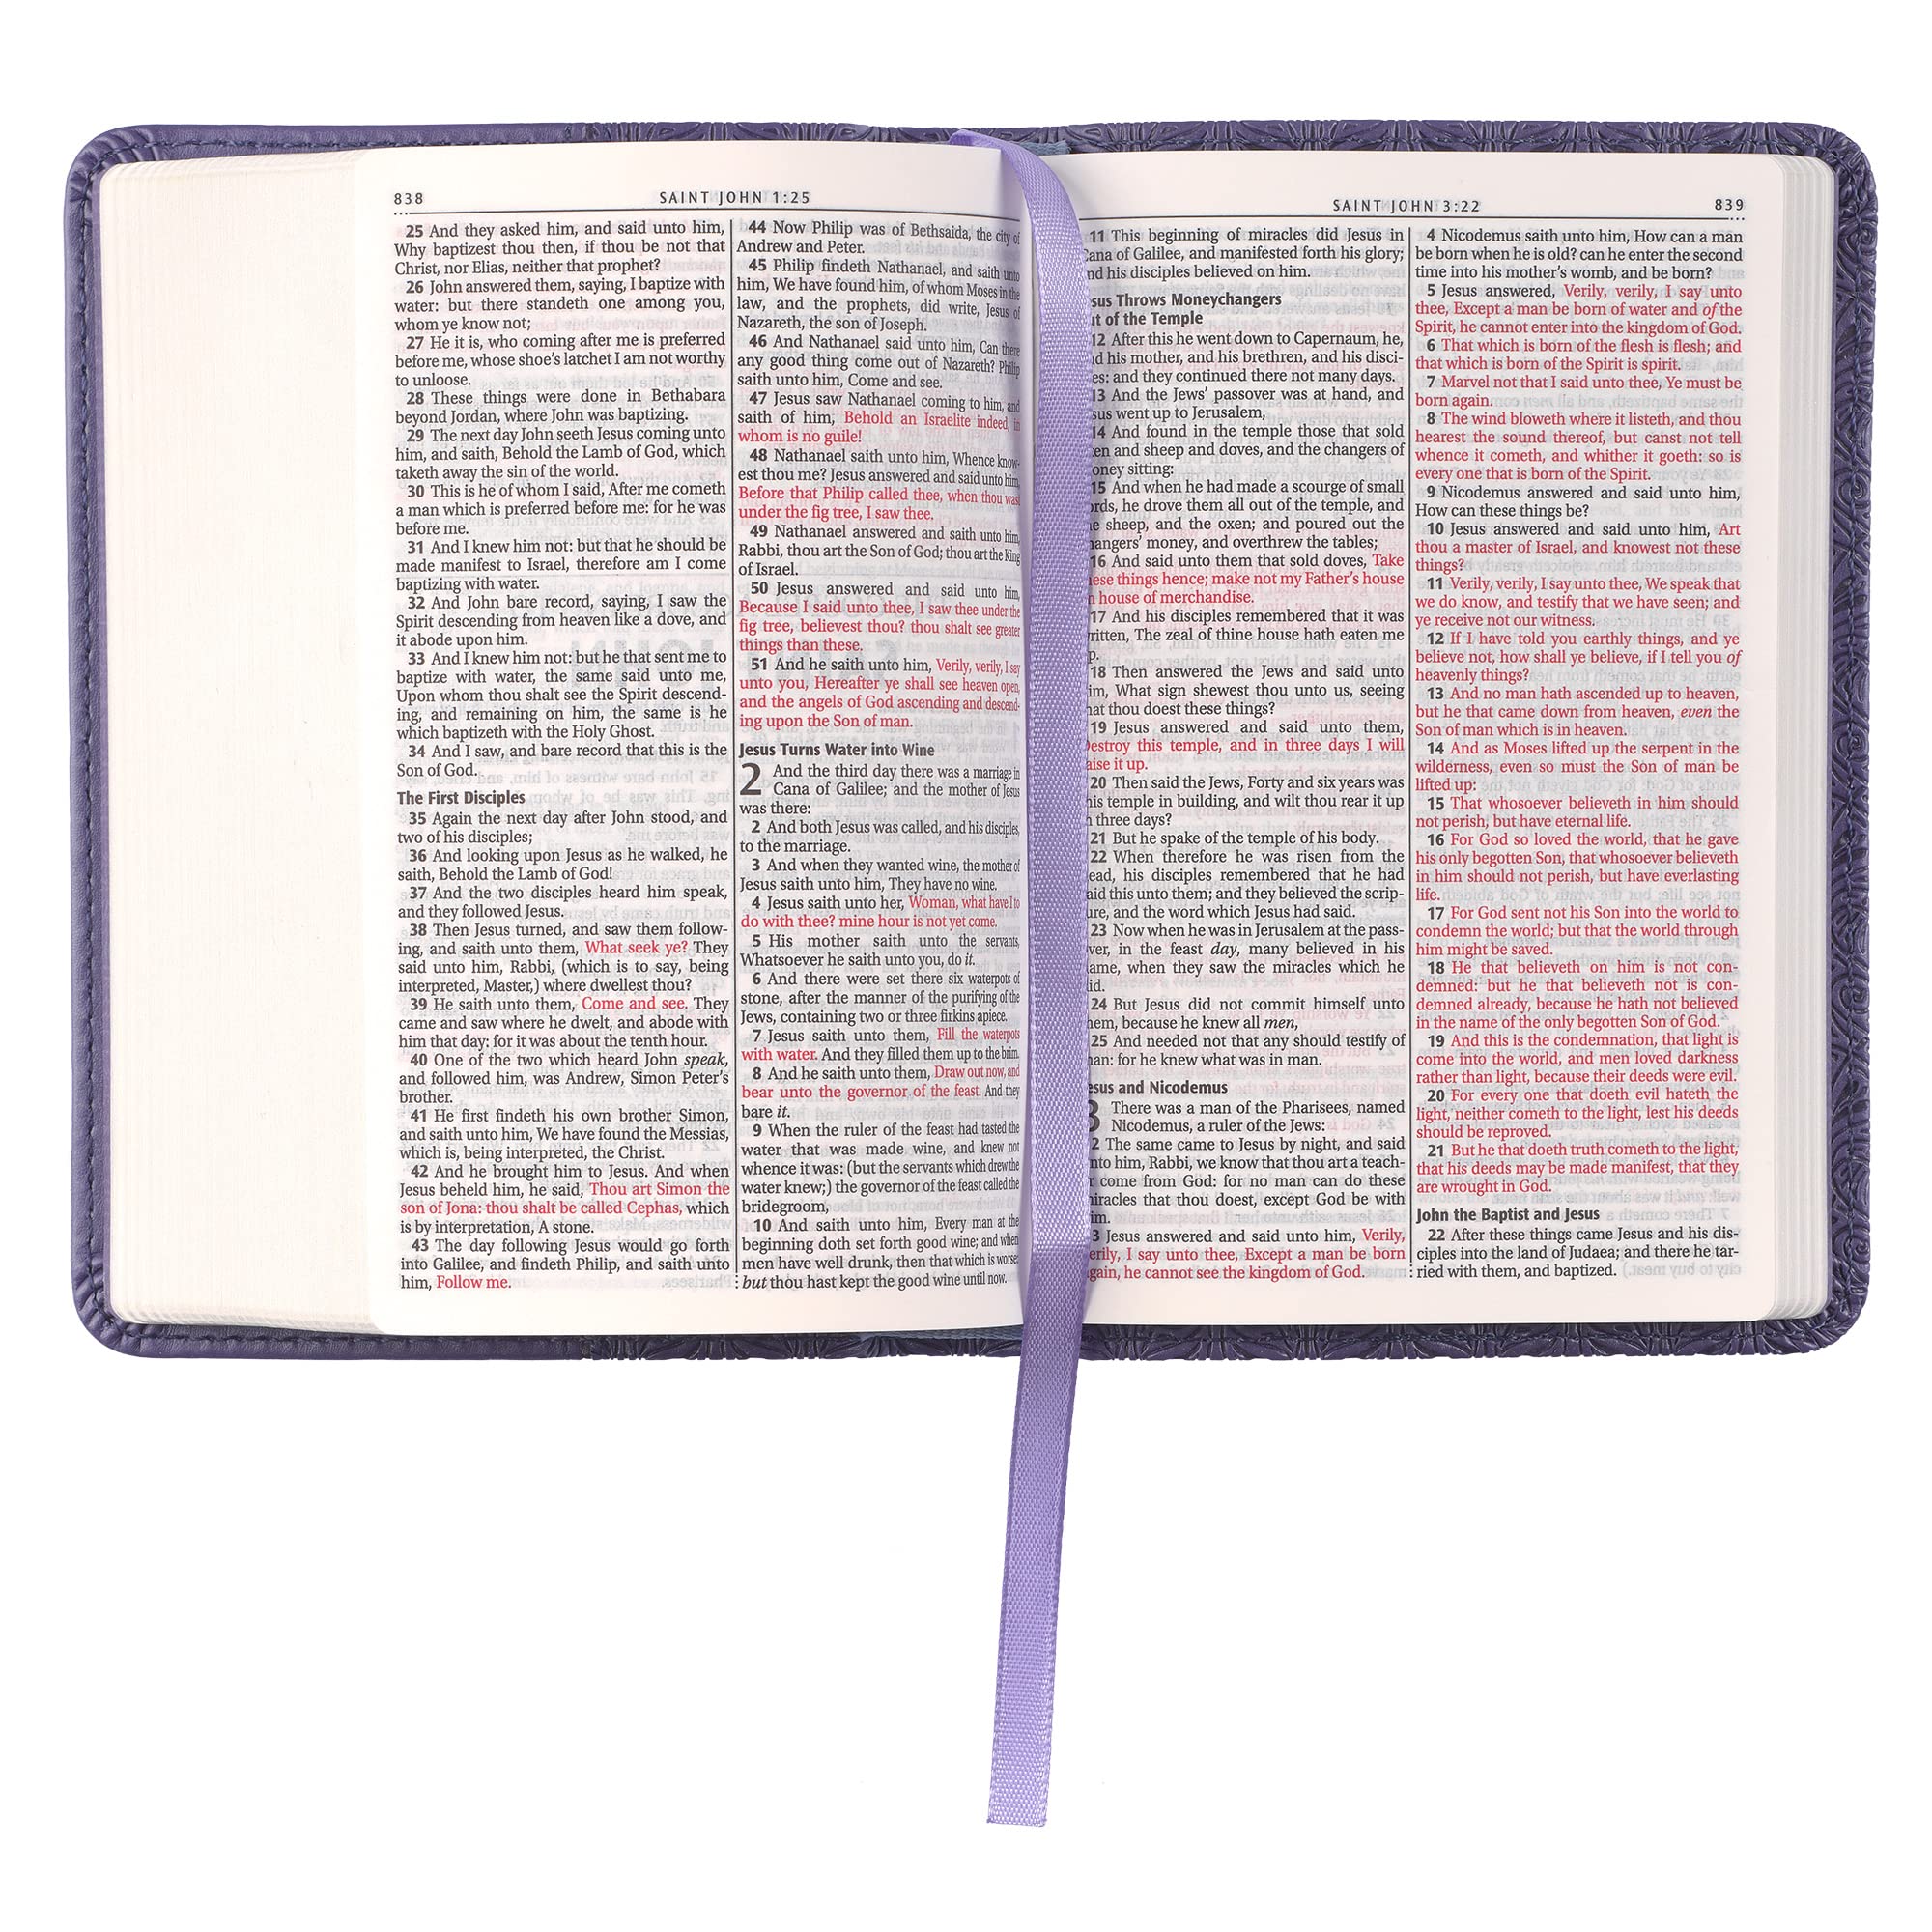 KJV Holy Bible, Mini Pocket Size, Faux Leather w/Ribbon Marker, Red Letter, King James Version, Purple